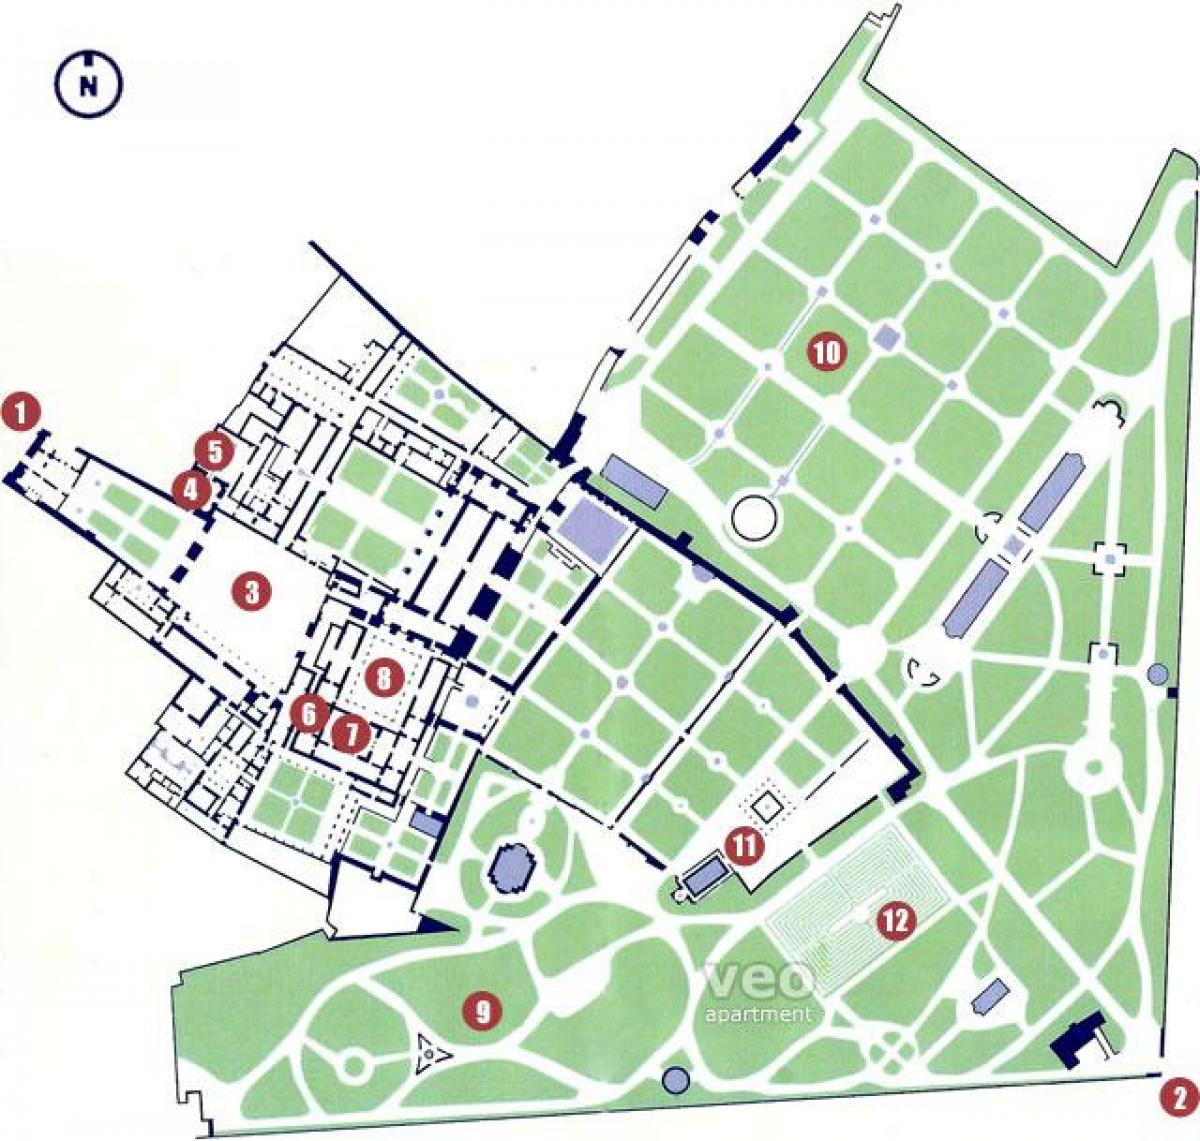 alkazar w Sewilli mapie